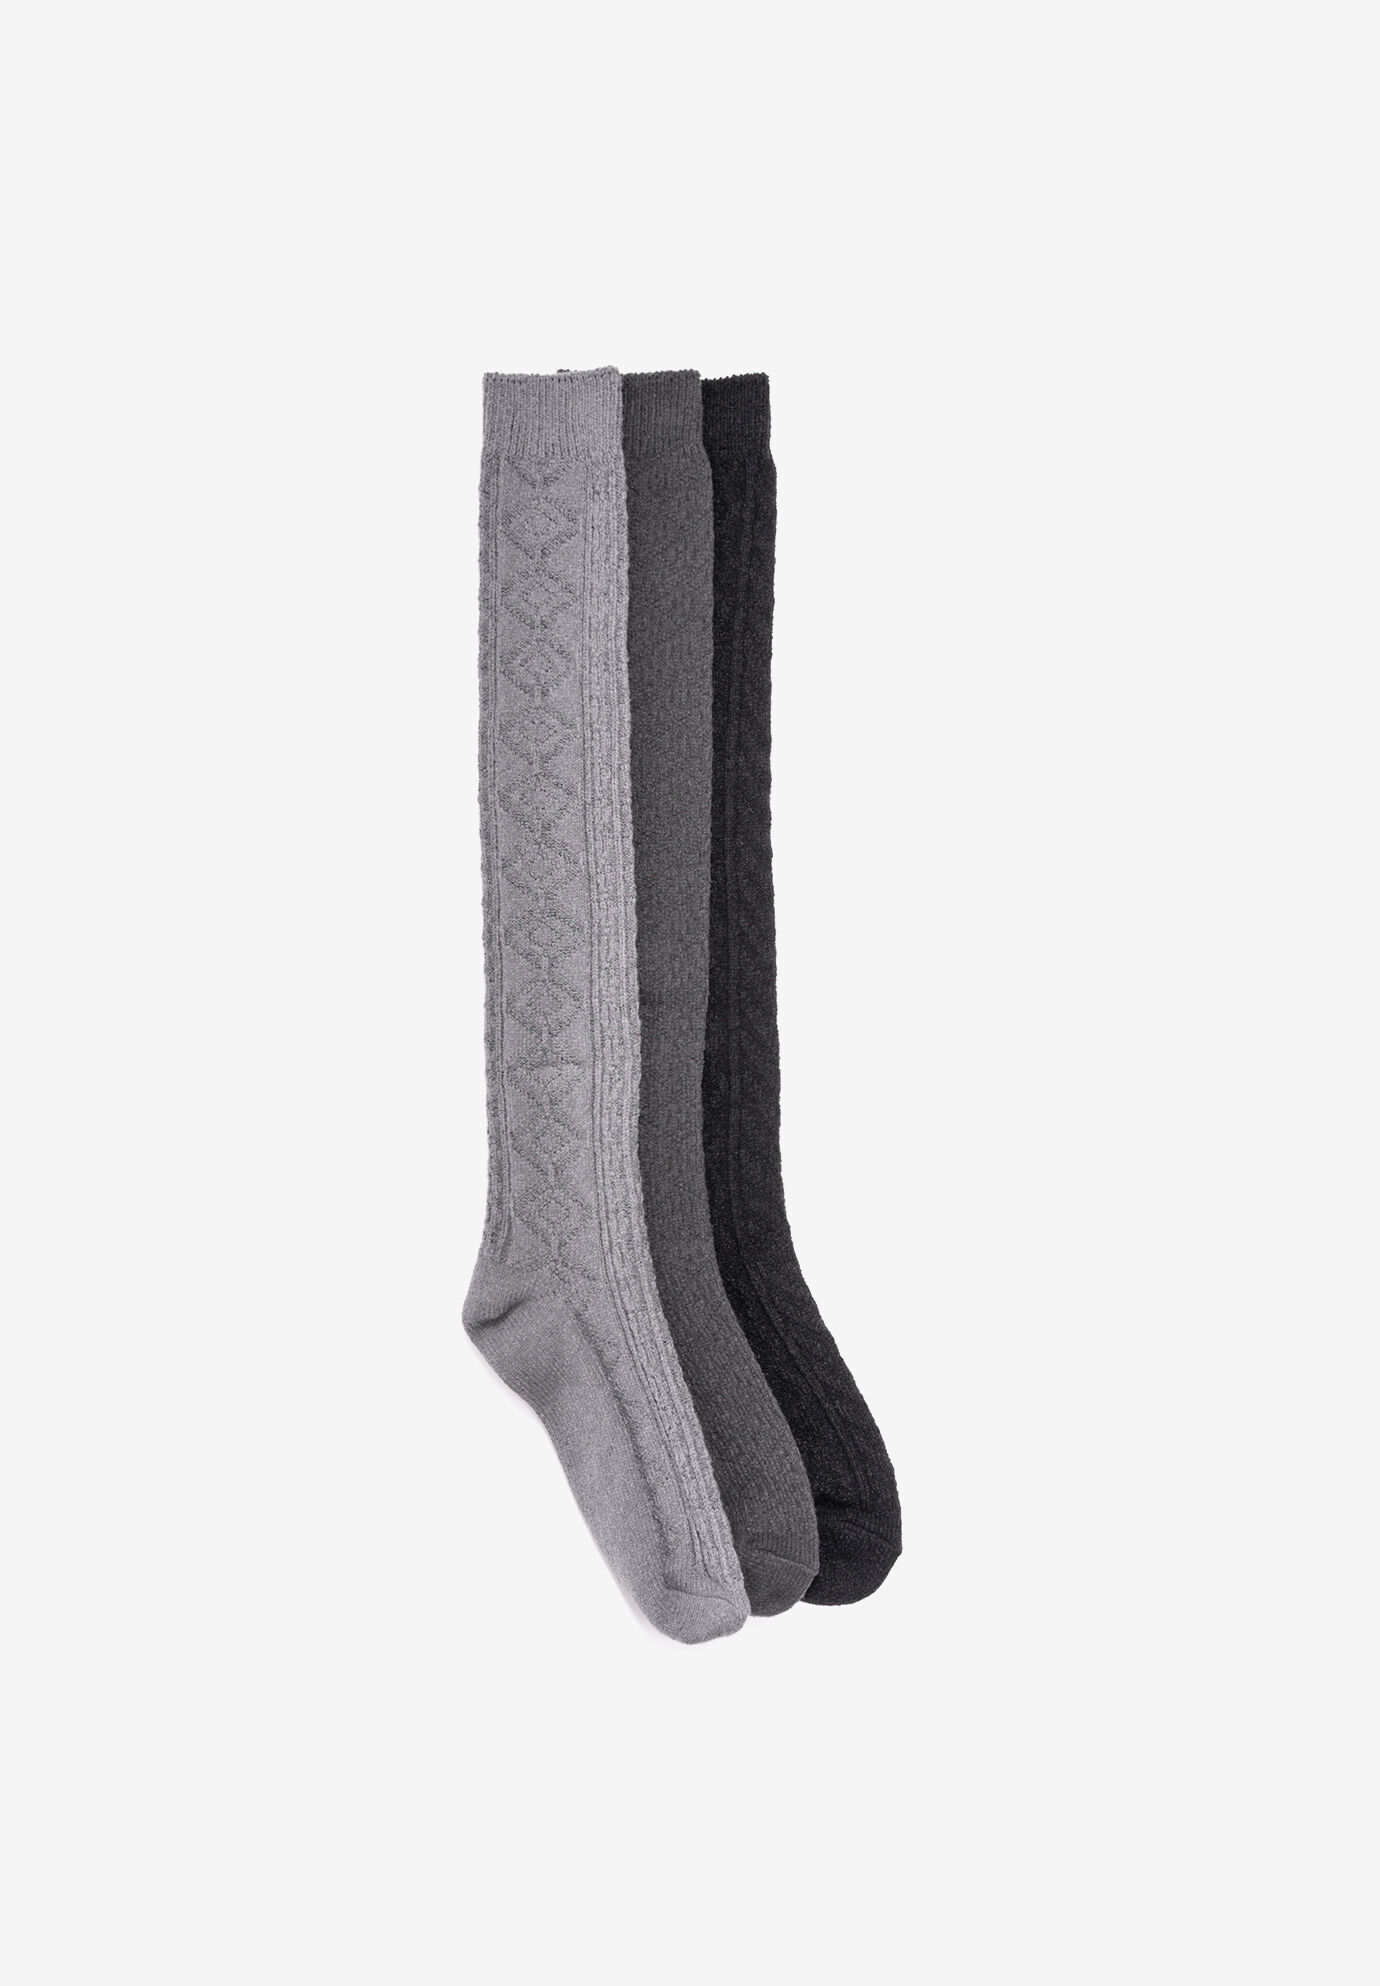 Women's 3 Pair Pack Knee High Socks by MUK LUKS in Dark Neutral (Size ONE)